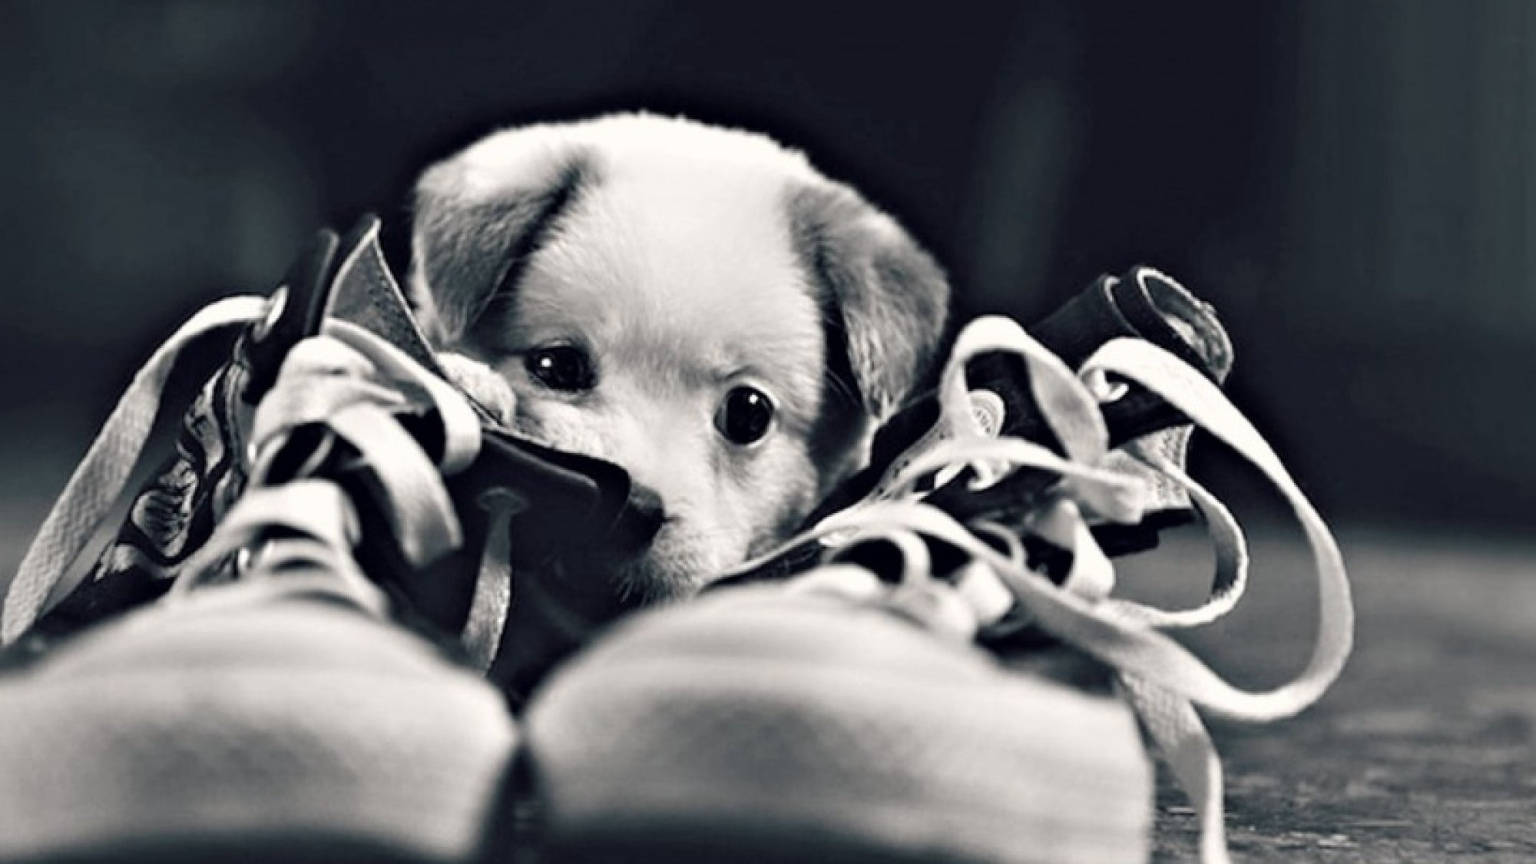 cute black and white puppy sneakers imyuzh9vl3spna60